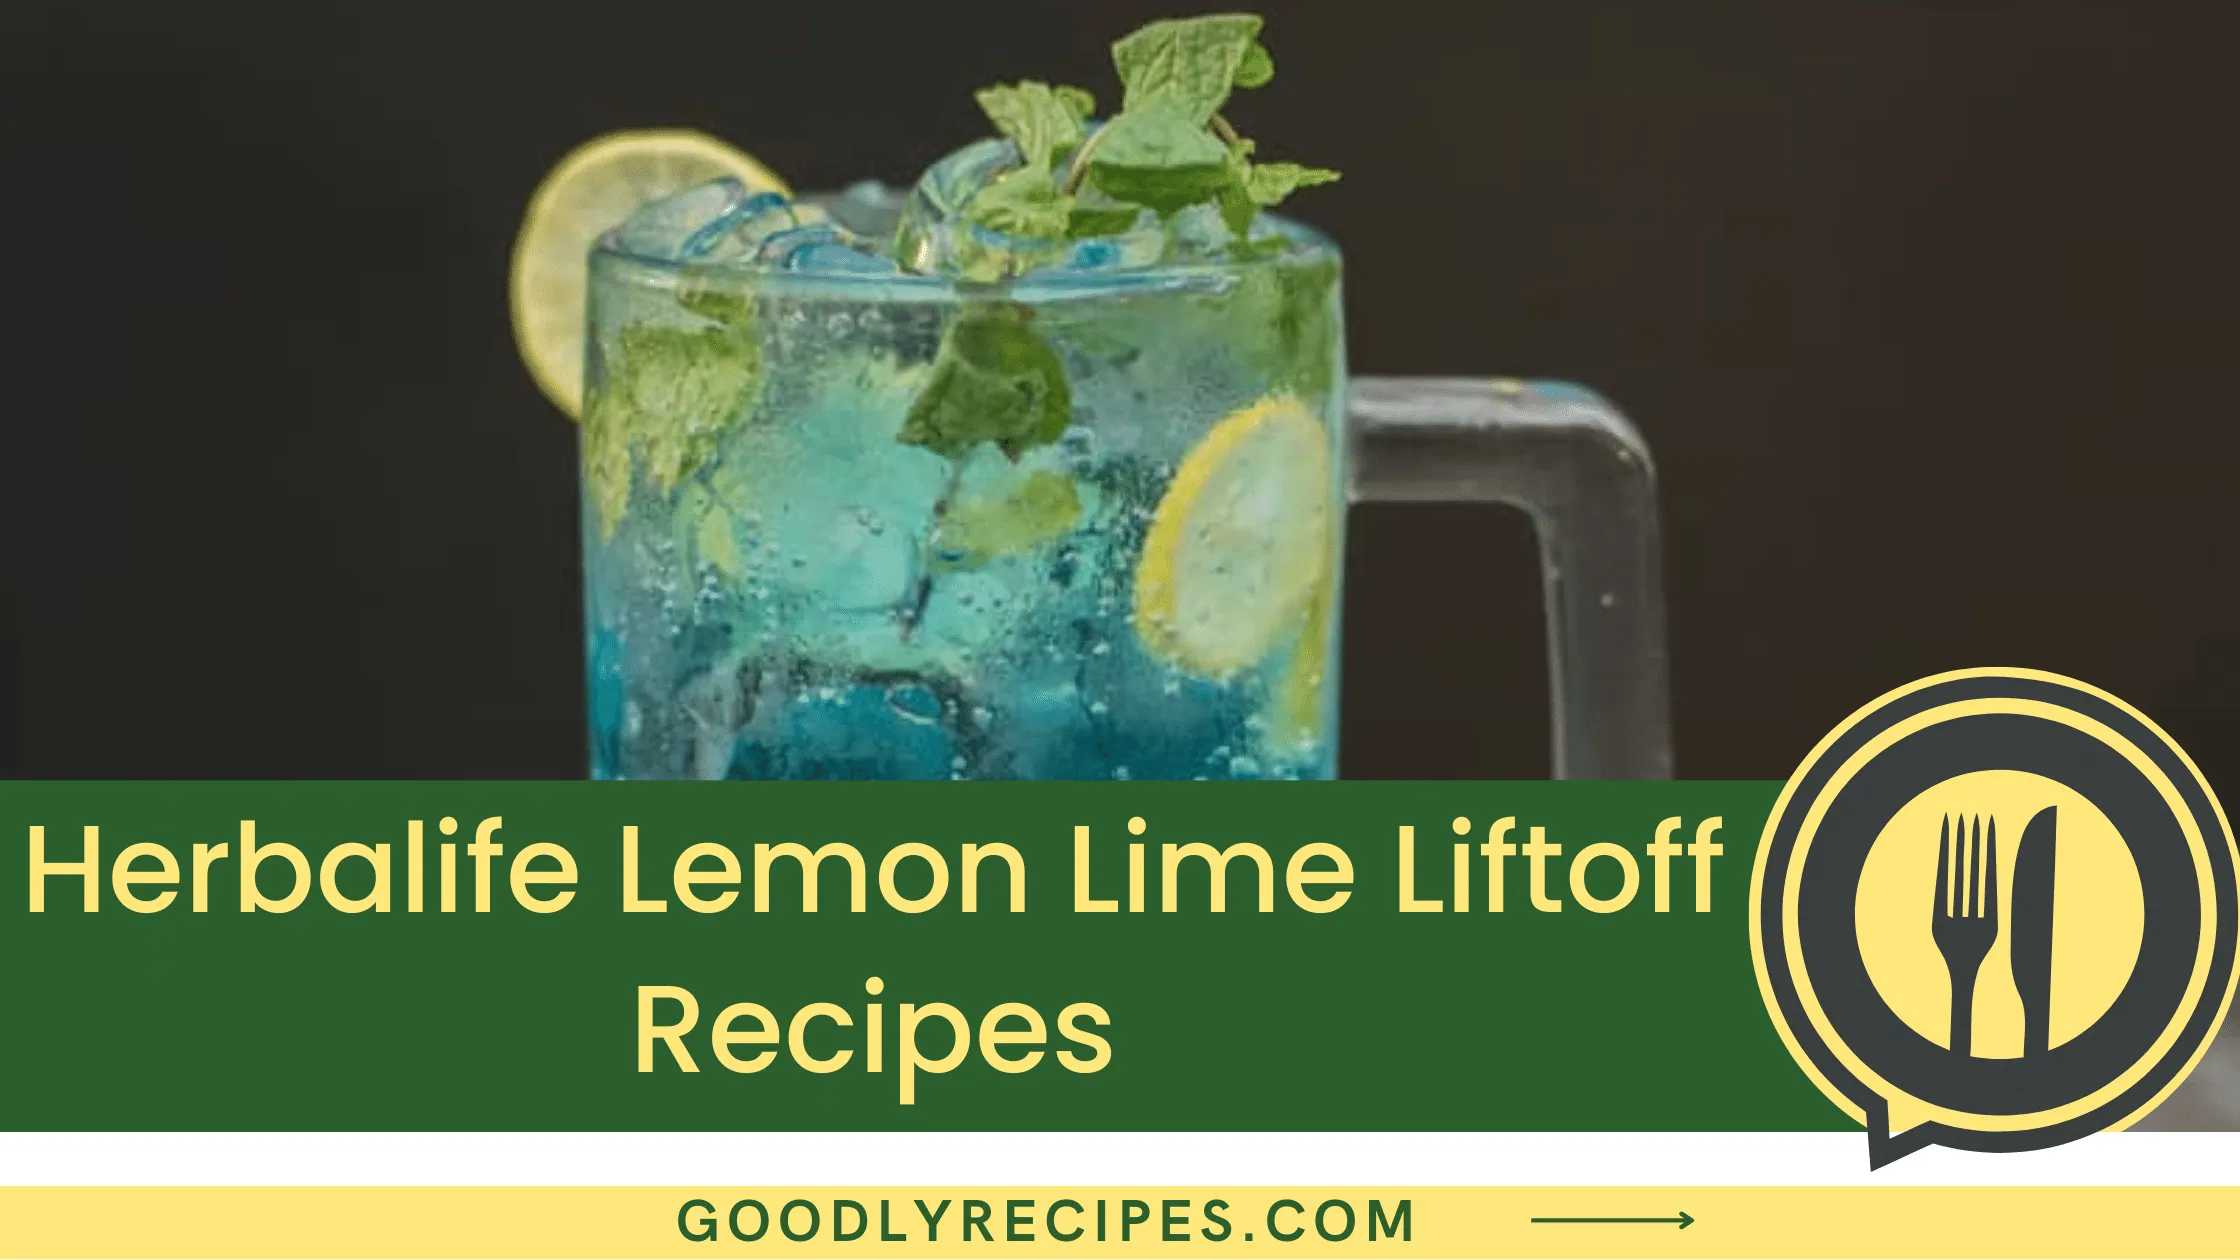 What is Herbalife Lemon Lime Liftoff?